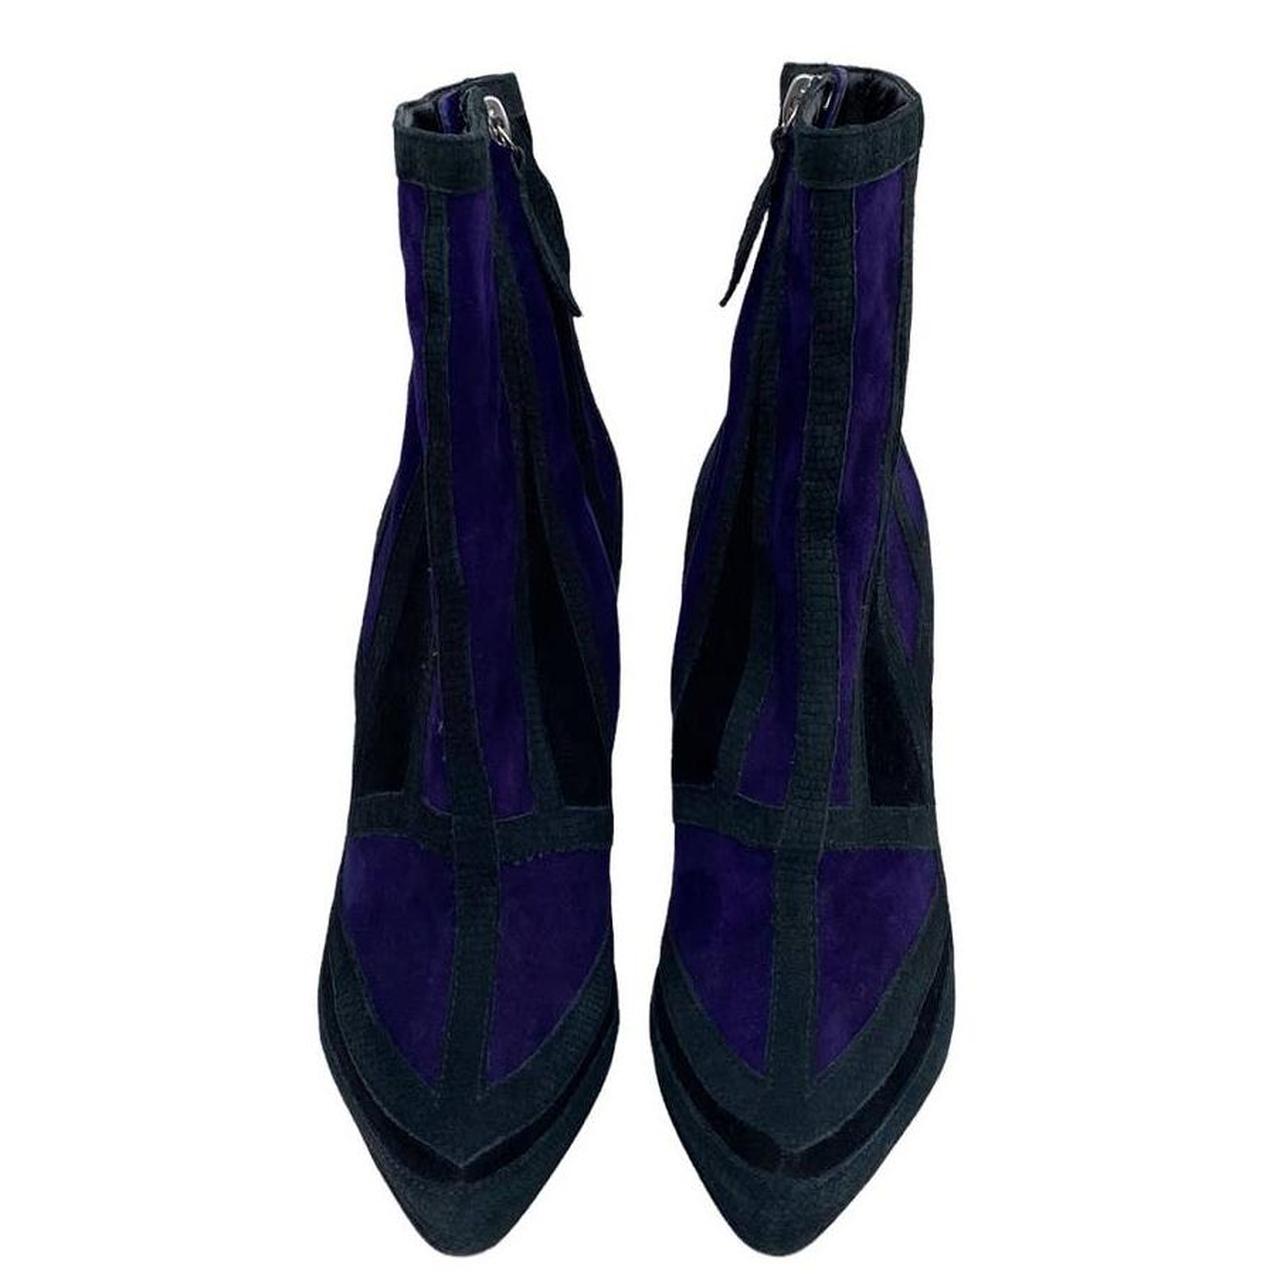 Aperlai Women's Black and Purple Boots (2)